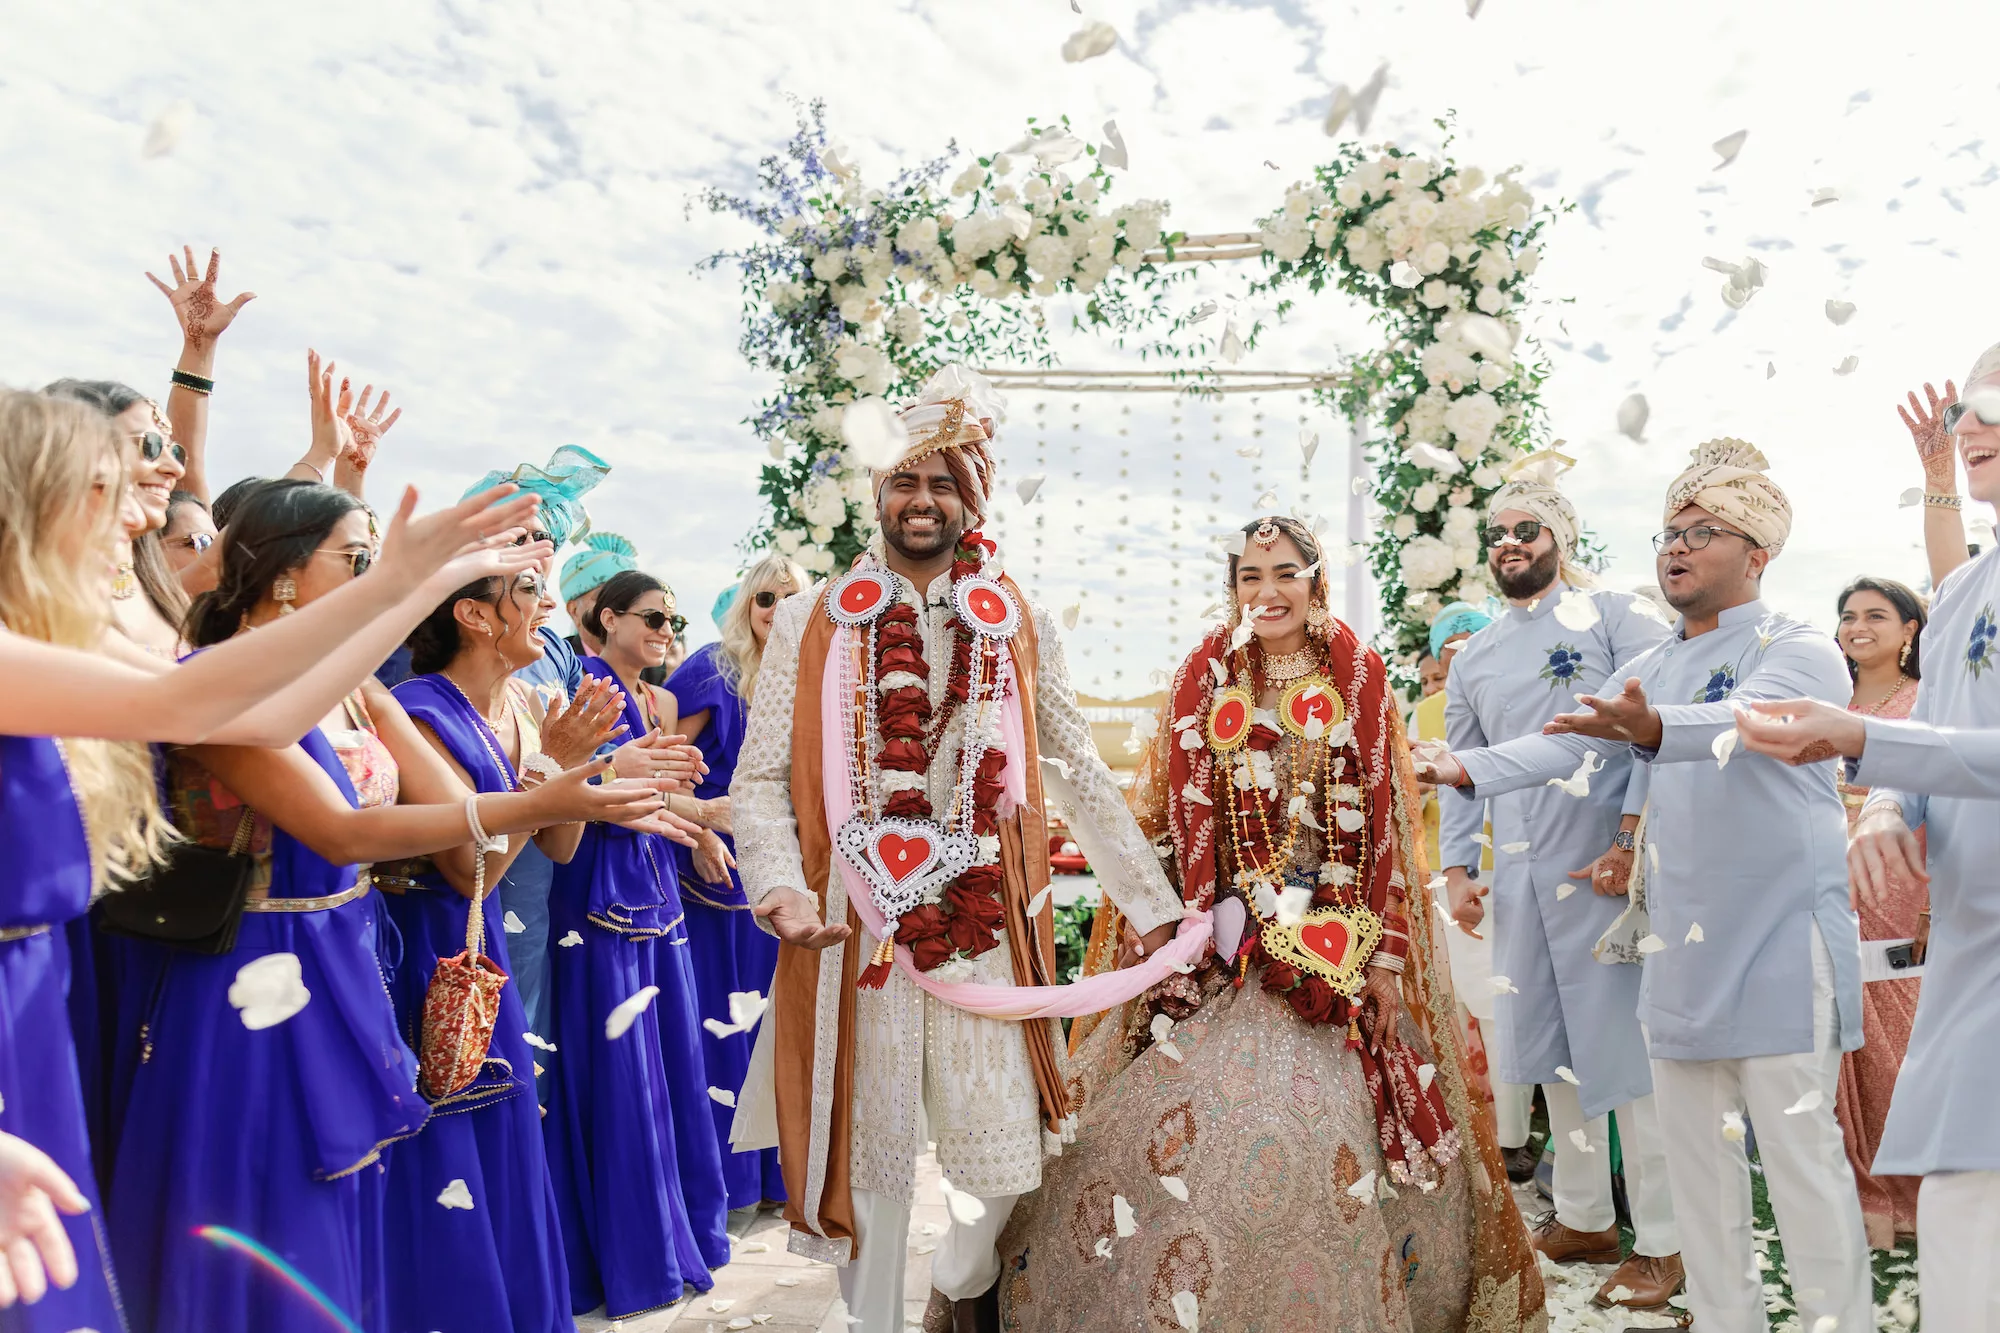 Bride and Groom Hindu Wedding Ceremony Inspiration | Blue Wedding Party Attire Ideas | St Pete Event Planner Coastal Coordinating